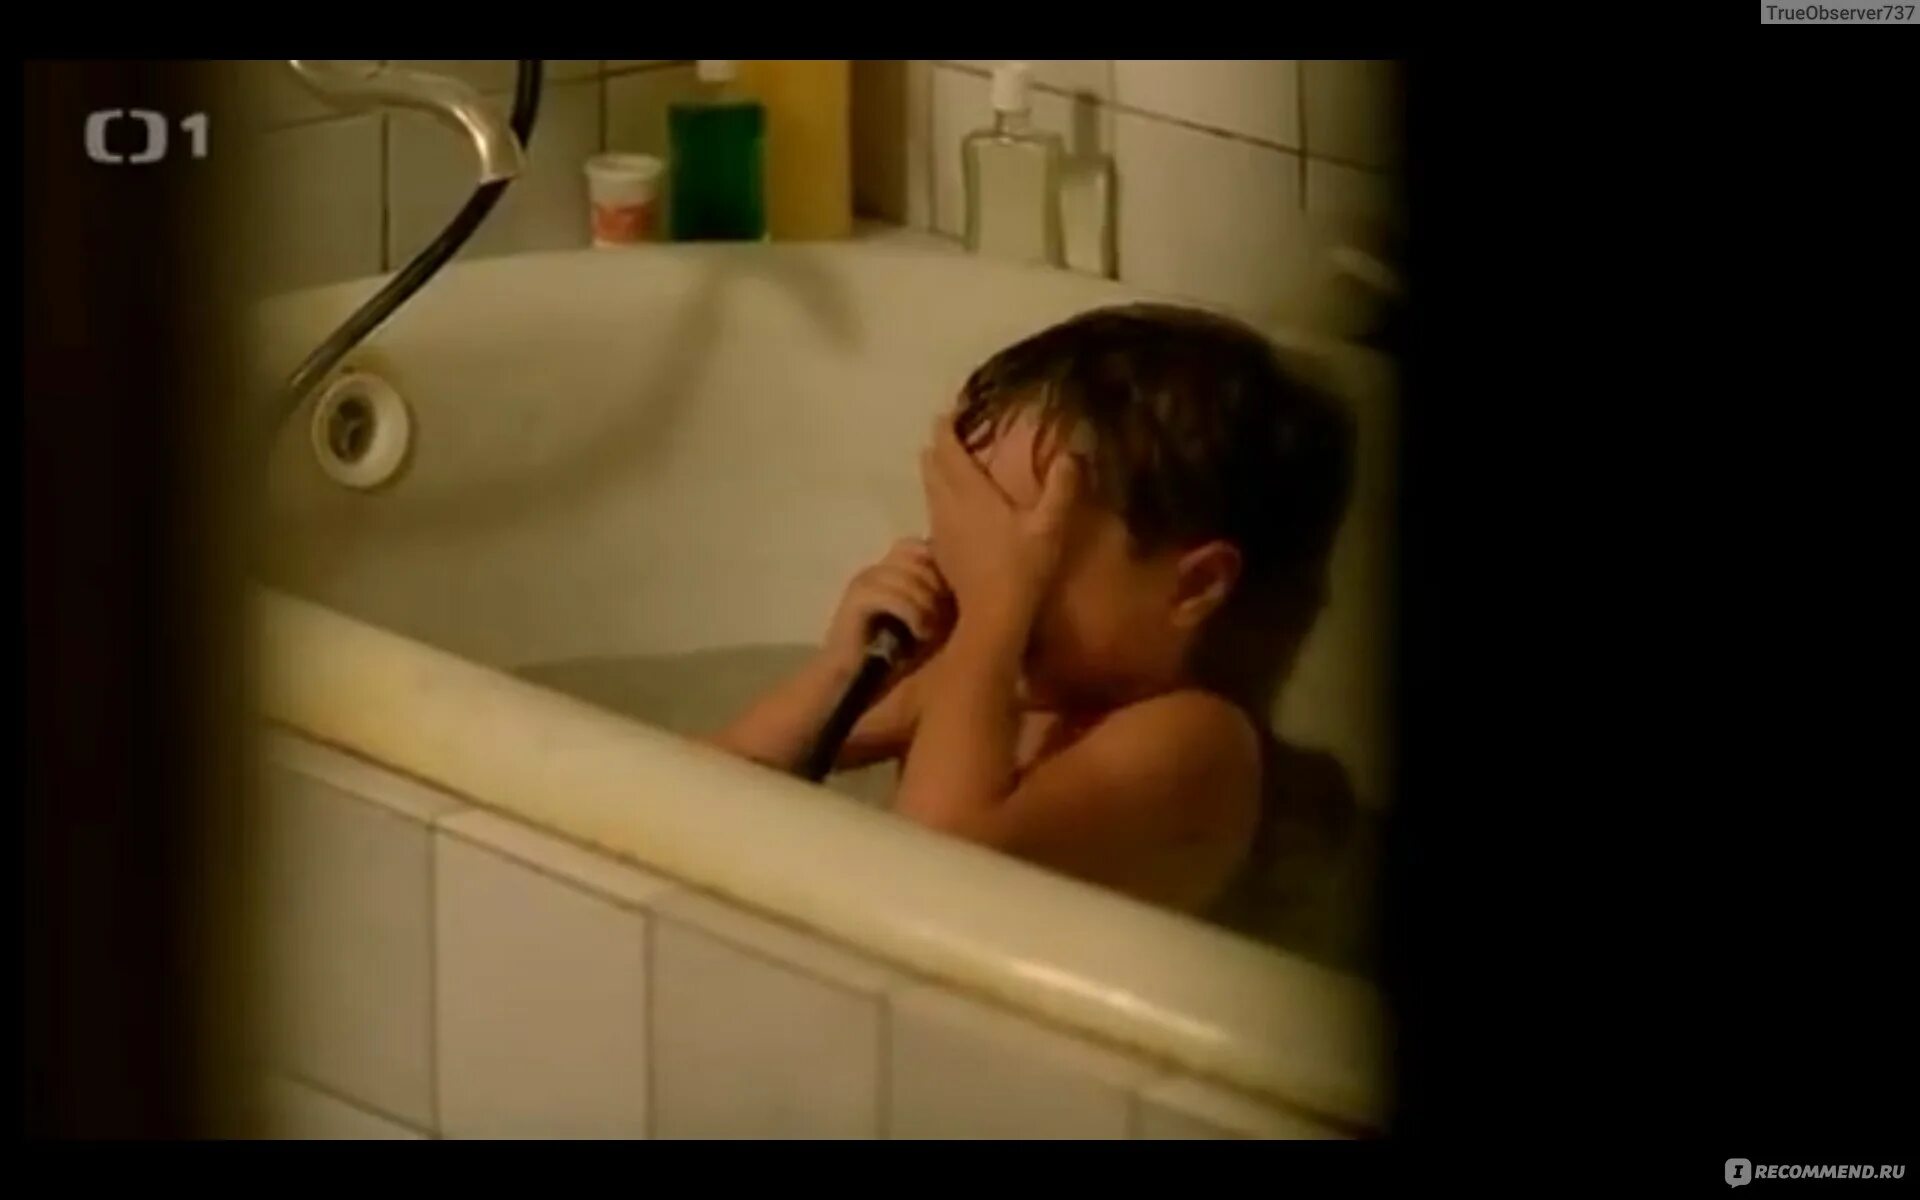 Мама в ванне видео. Мальчишки в ванной. Мальчик в ванной. Женщина с мальчиком в ванной.